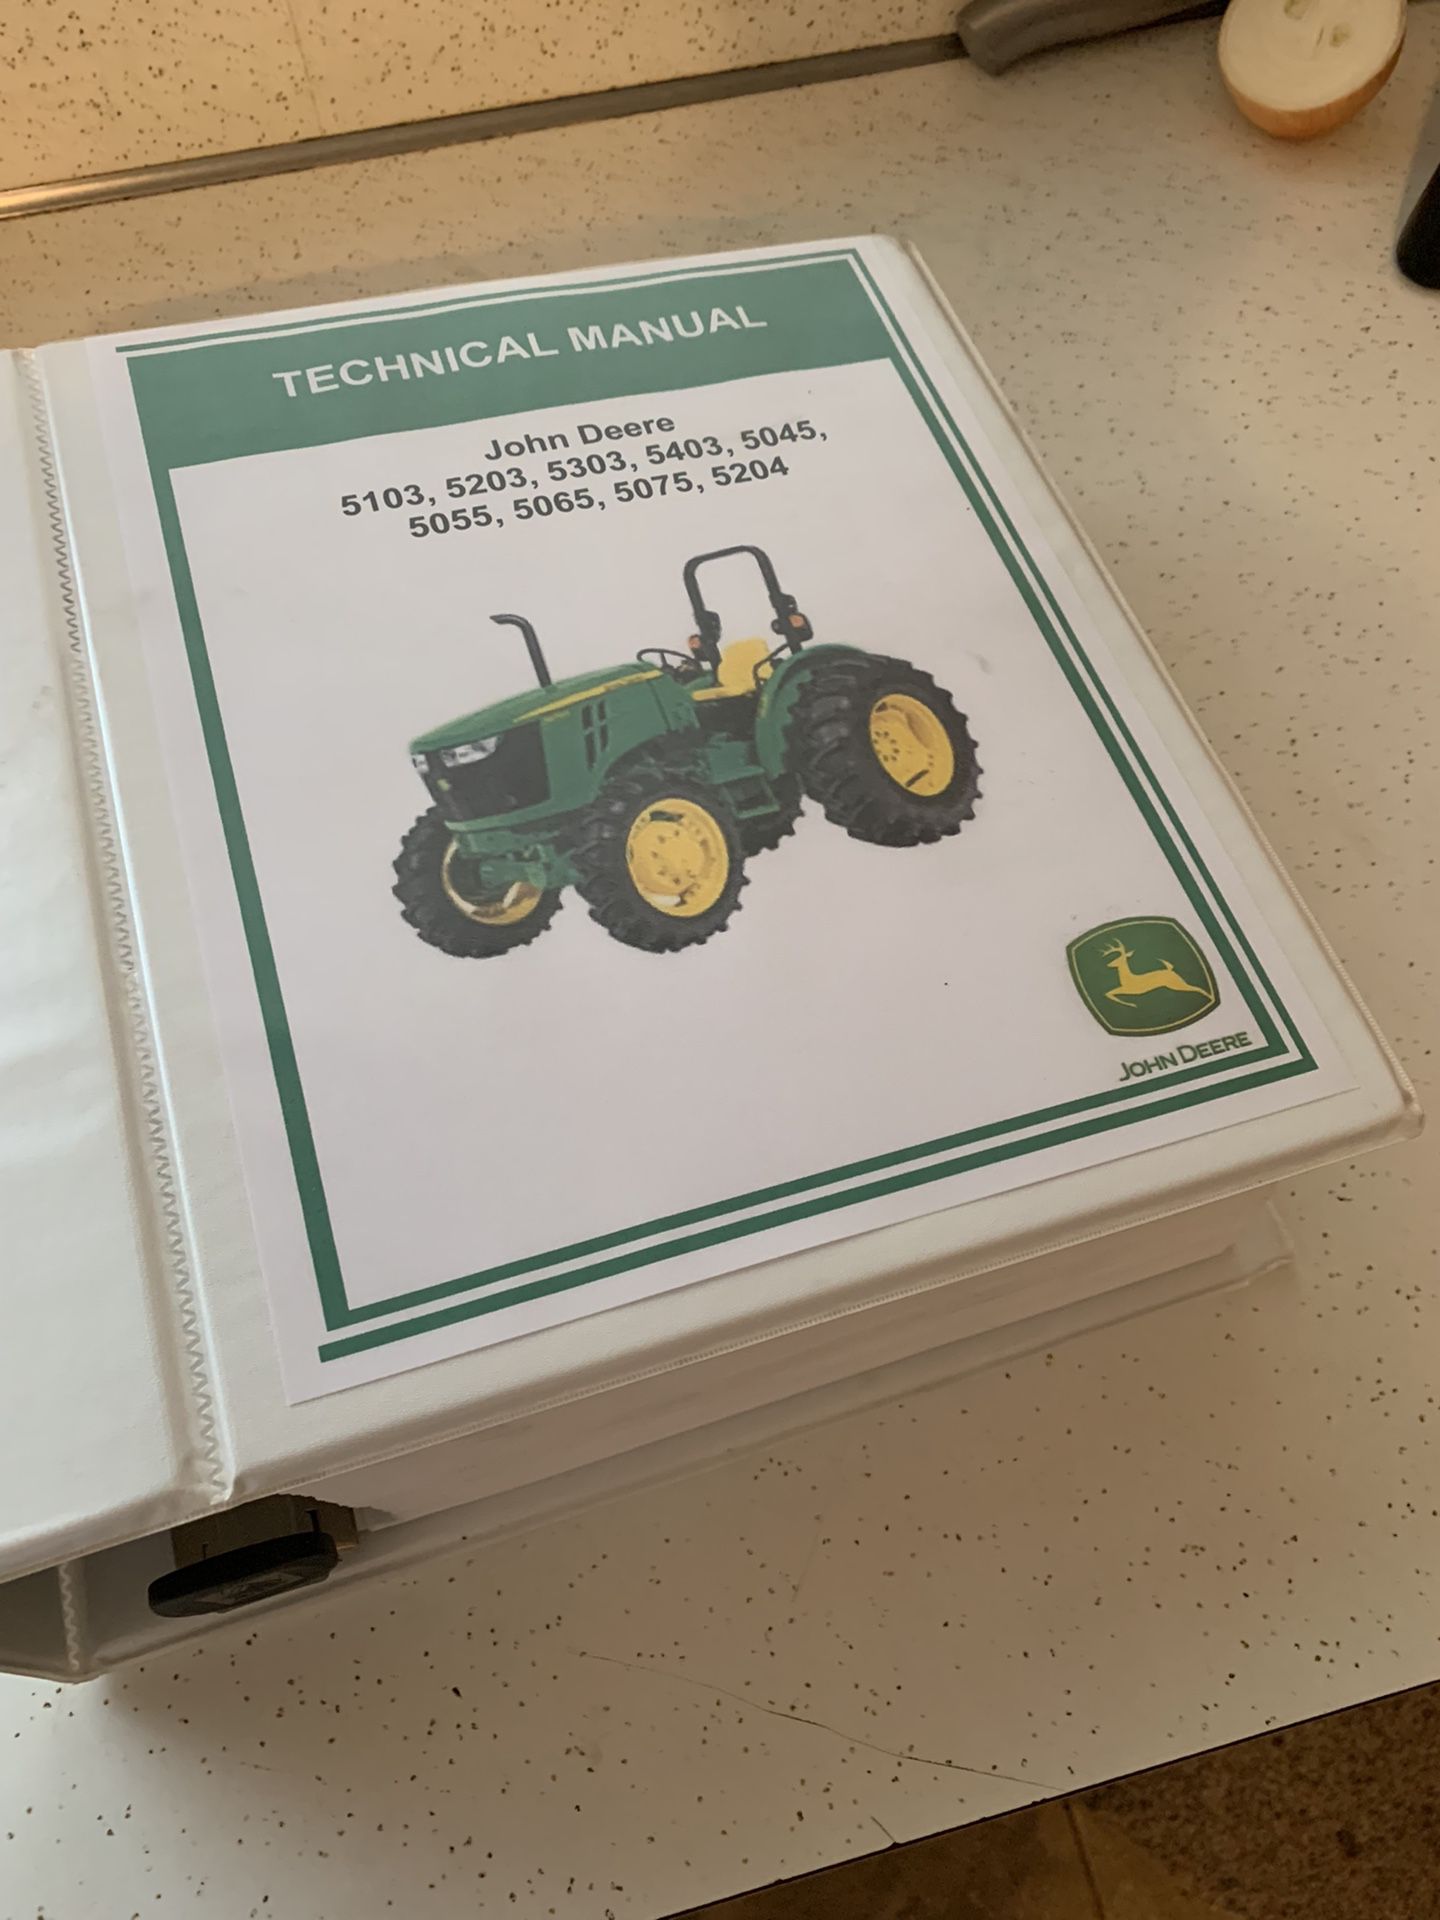 John Deere tractor technical manual